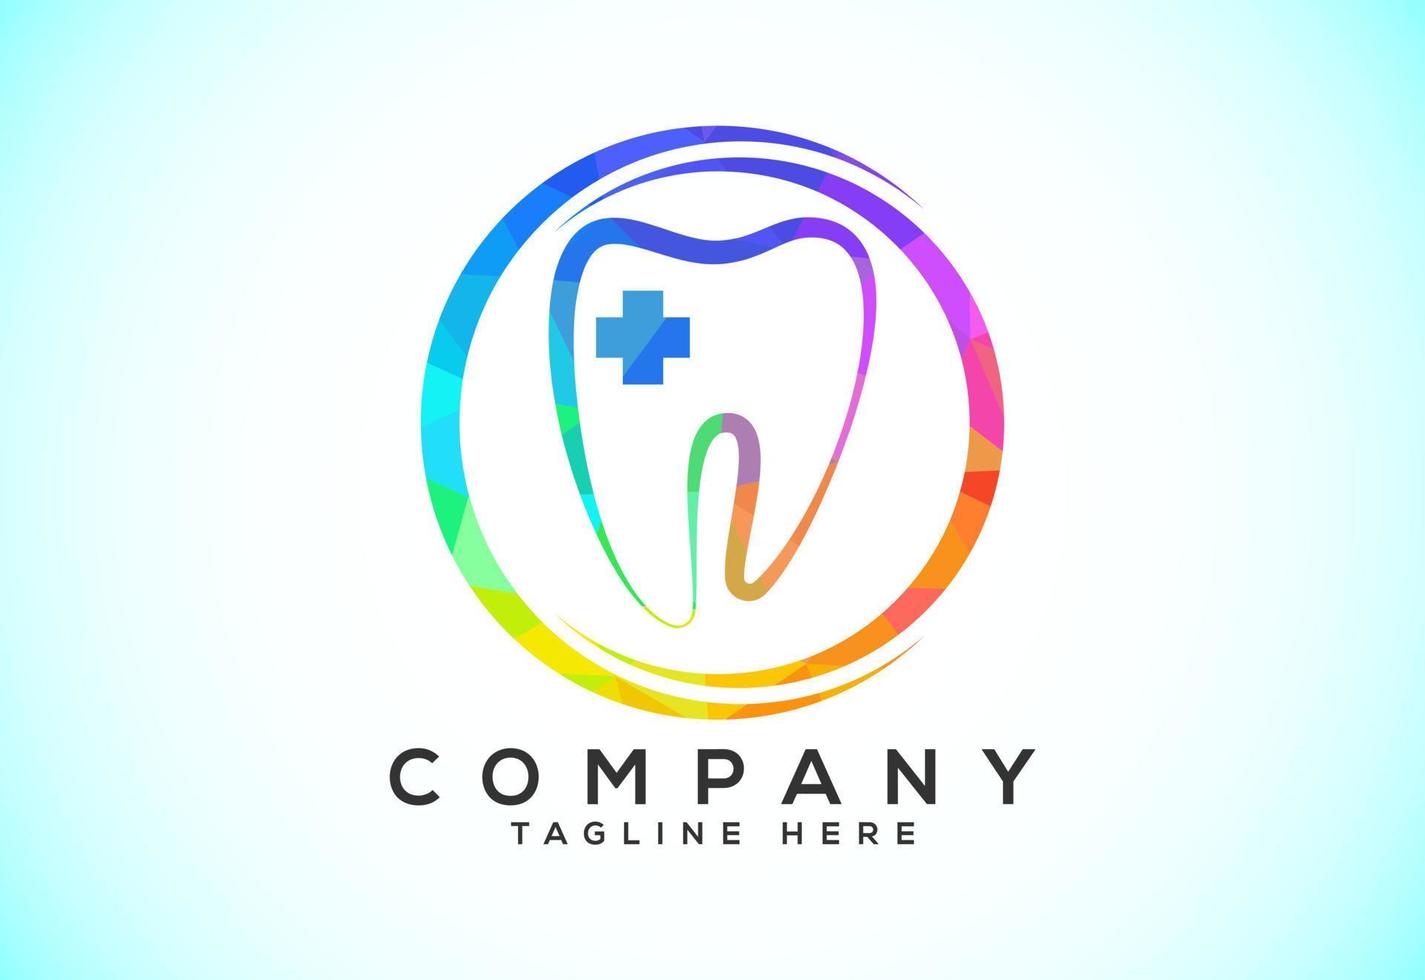 poligonal dente dental logotipo. baixo poli estilo dental clínica logotipo vetor ilustração.